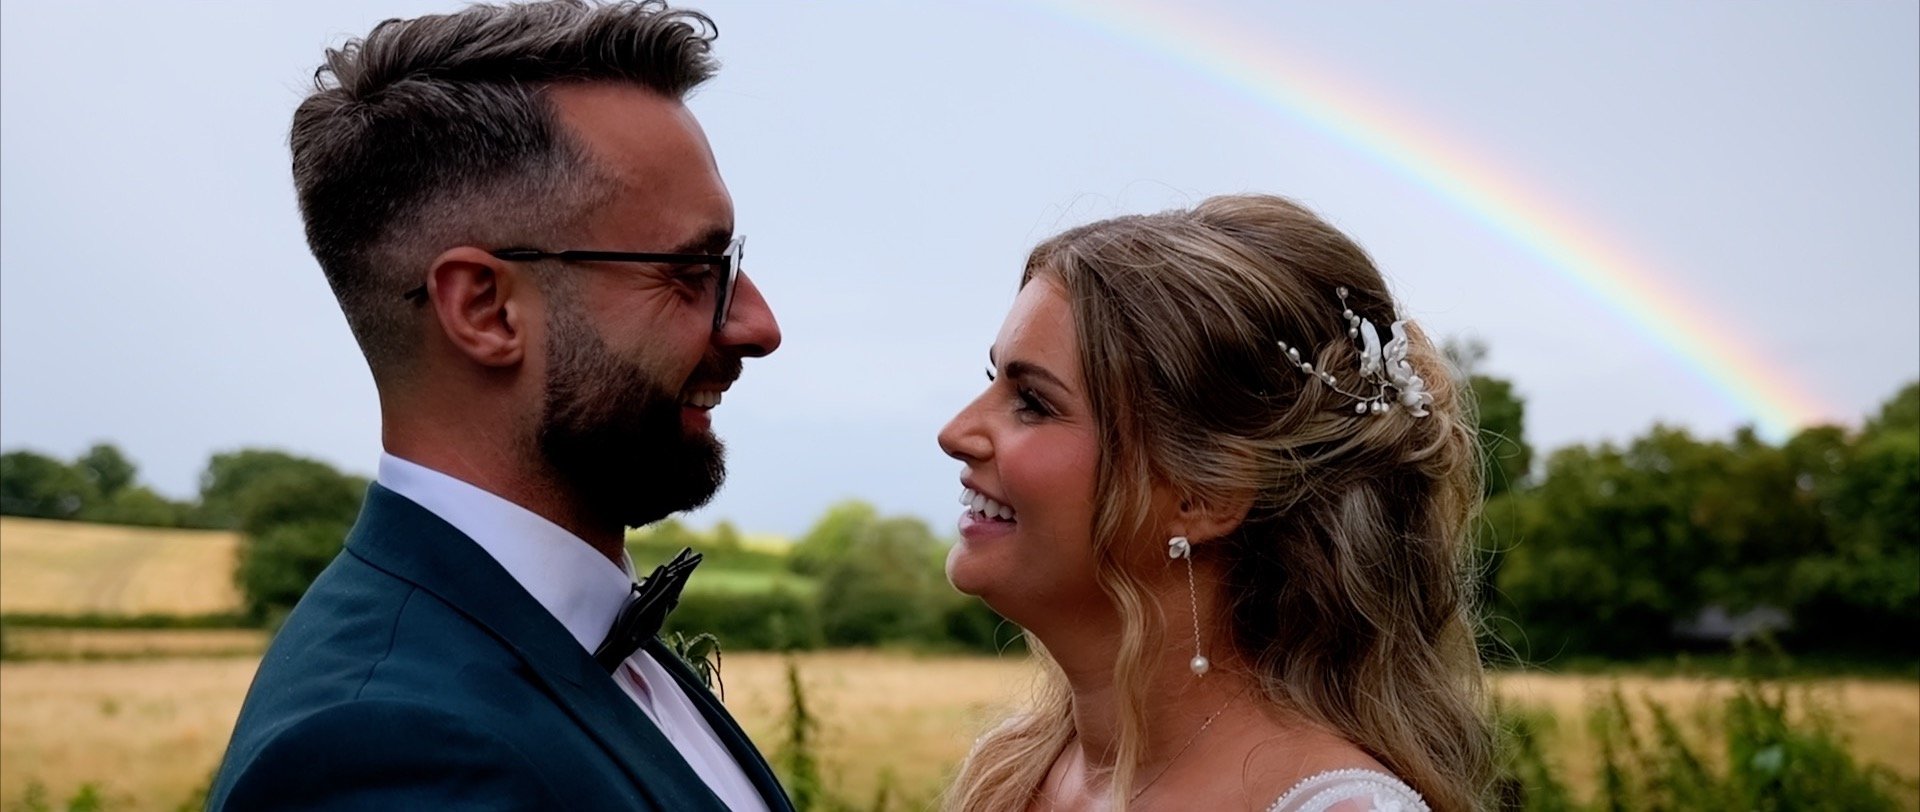 Rainbow wedding video - 3 Cheers Media - Essex.jpg